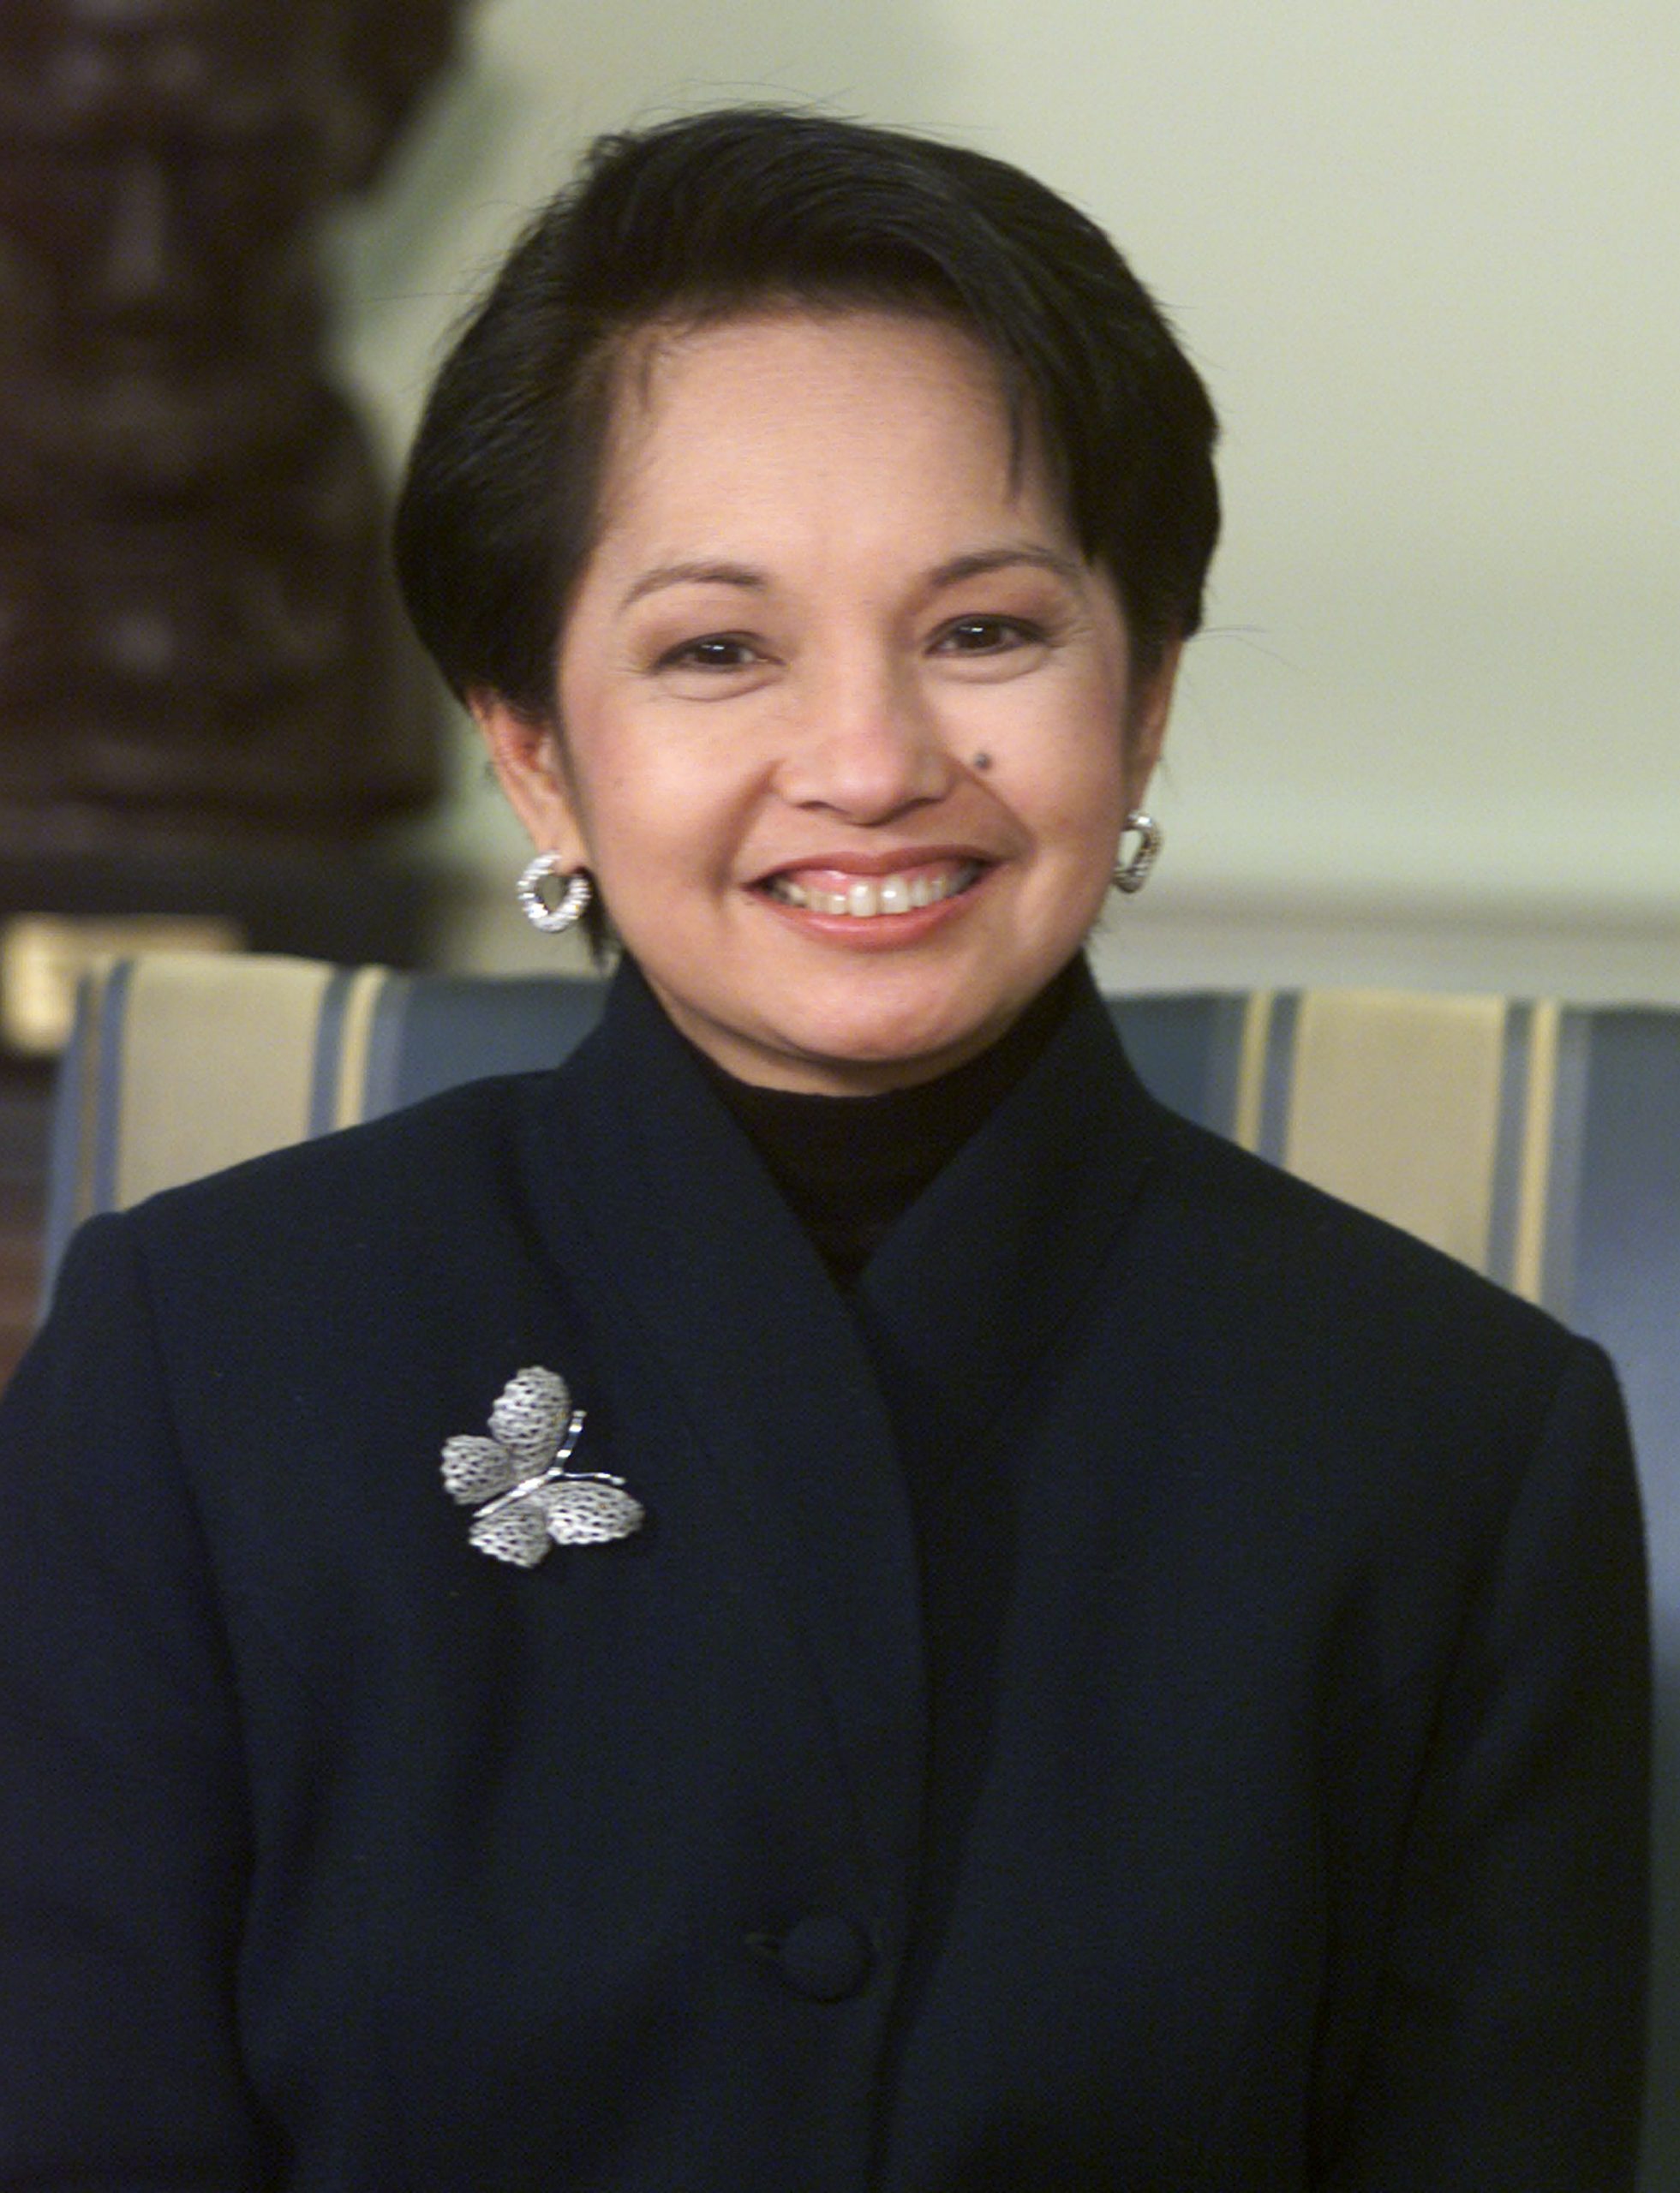 Gloria Macapagal-Arroyo